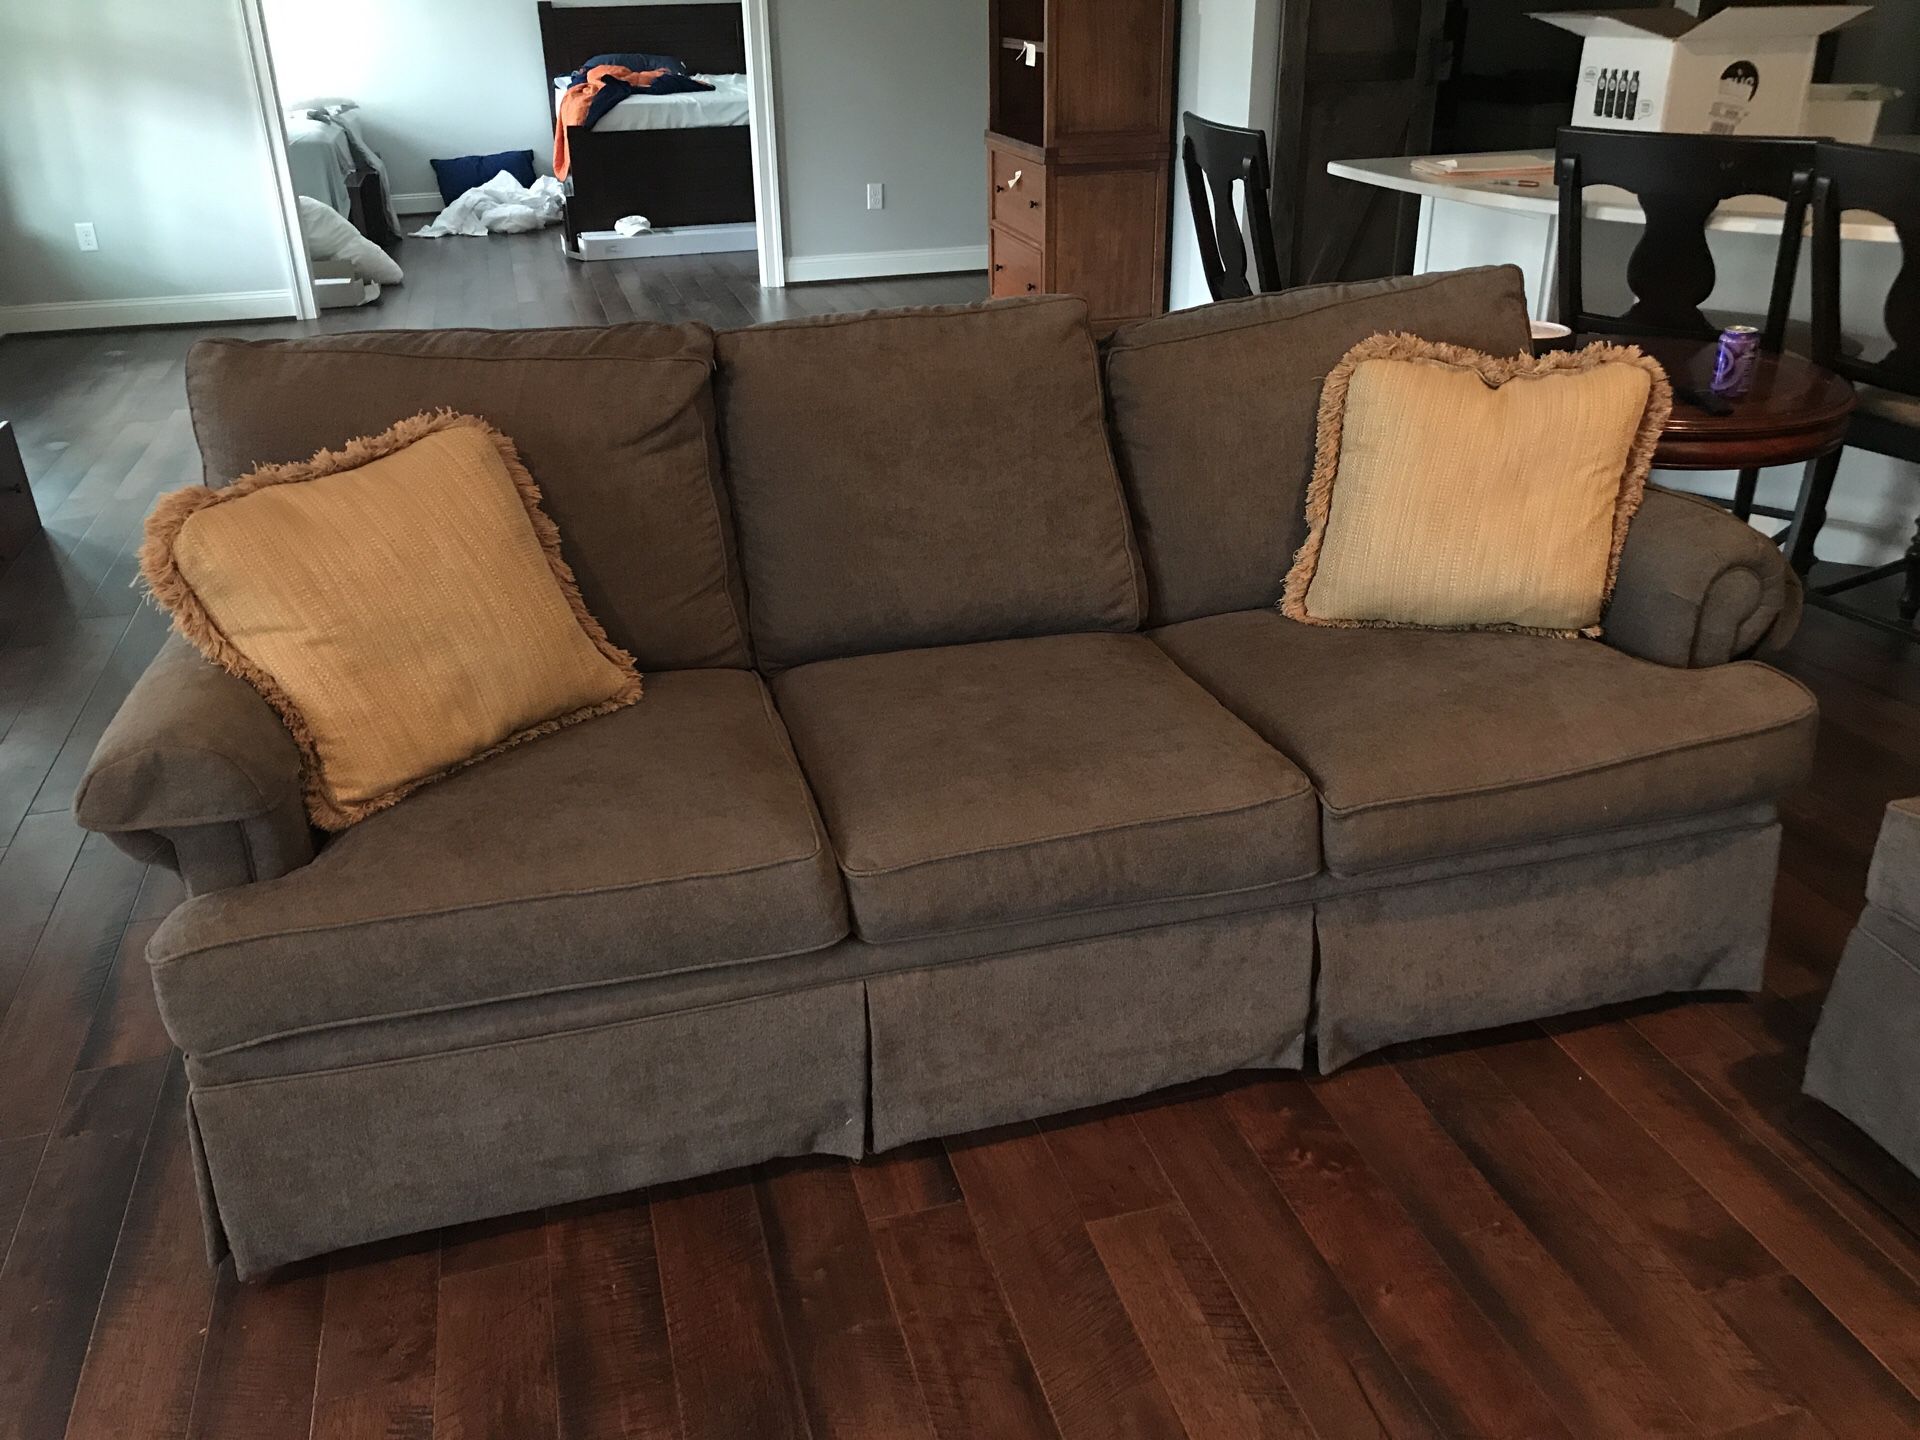 Two matching Bassett custom grey sofas-$450 each